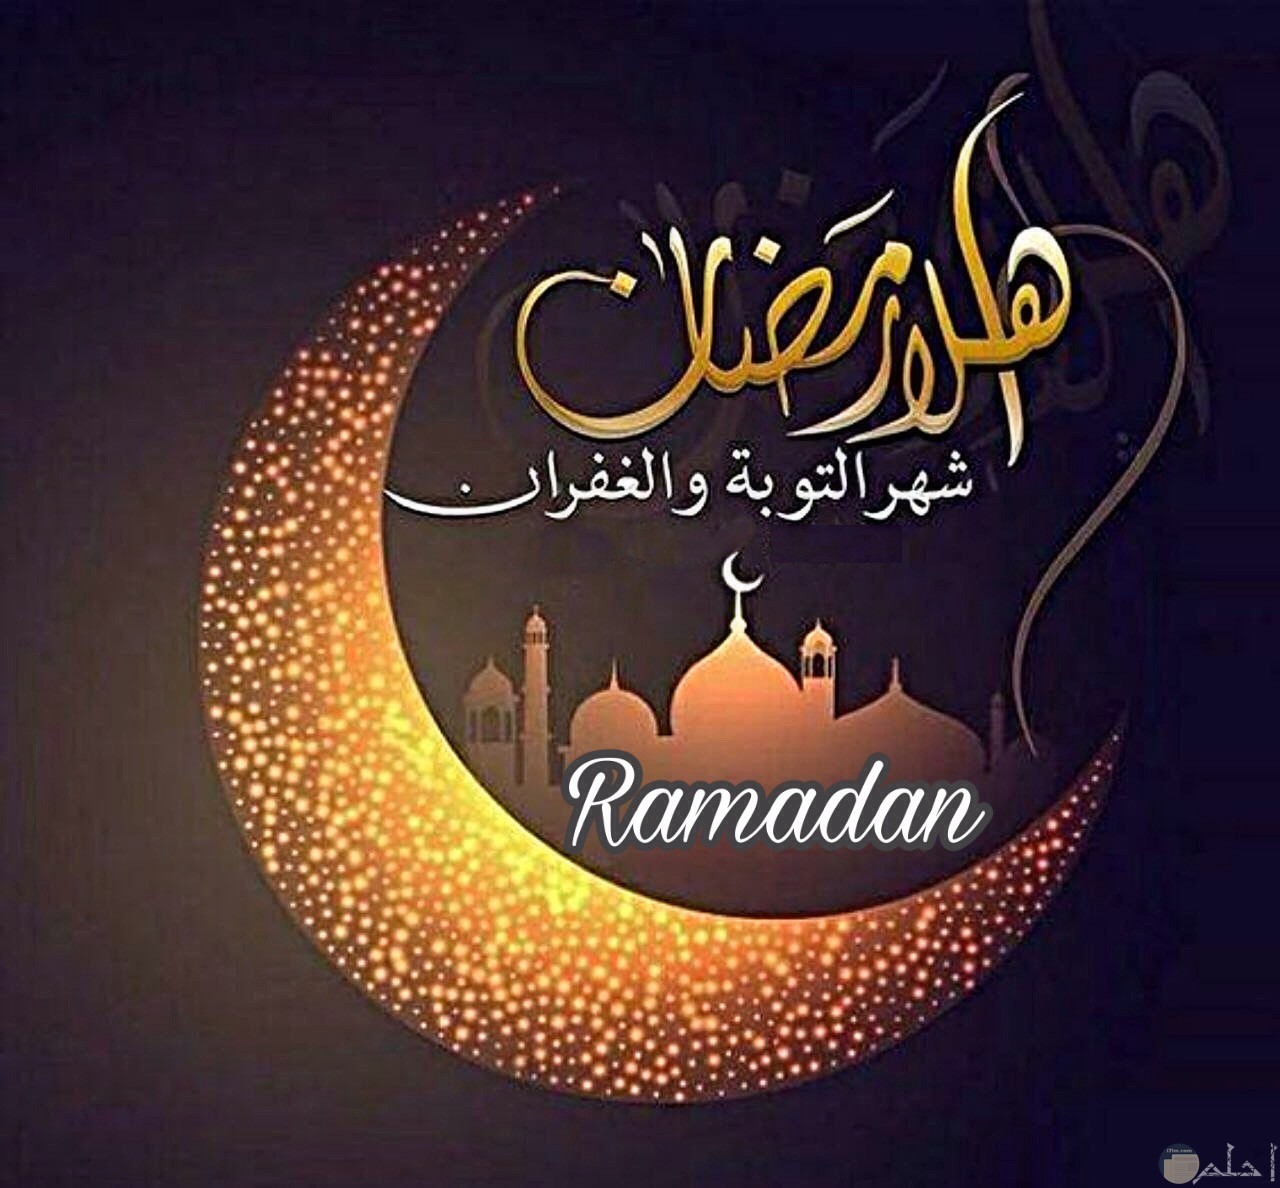 صور لشهر رمضان المبارك 2020